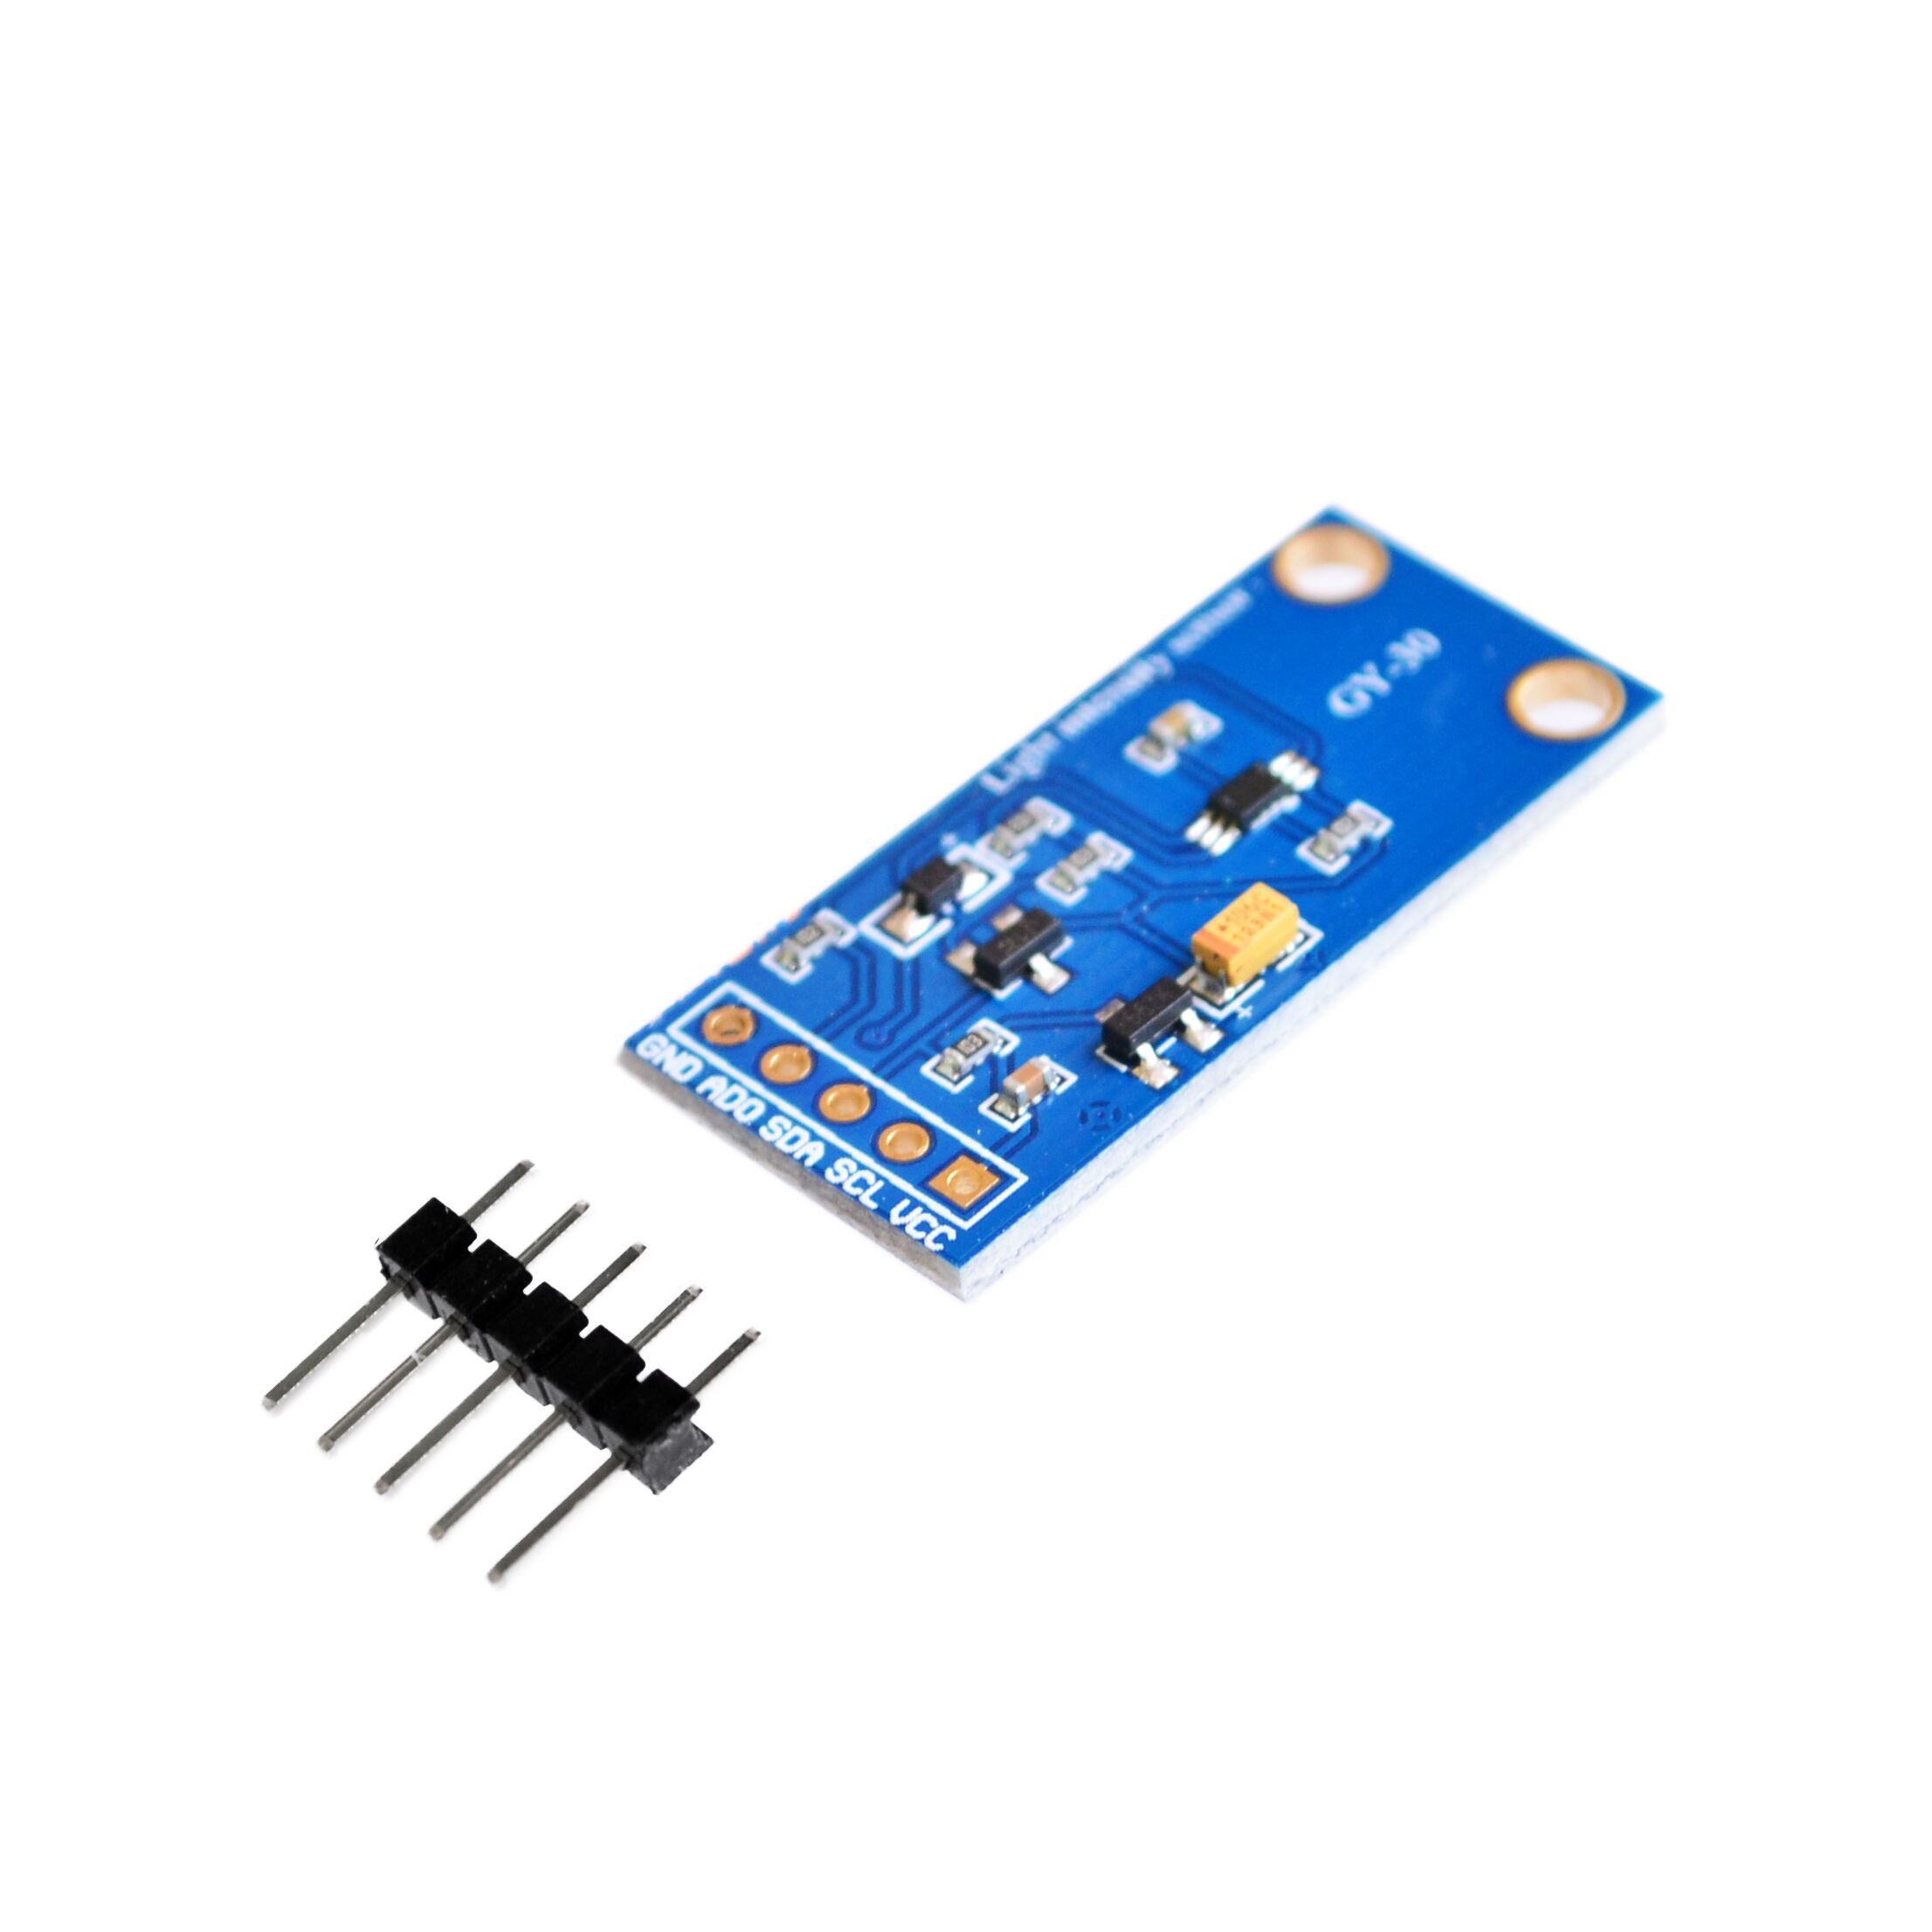 Details about   BH1750FVI Digital Light intensity Sensor Module For Arduino 3V-5V Power NEW 